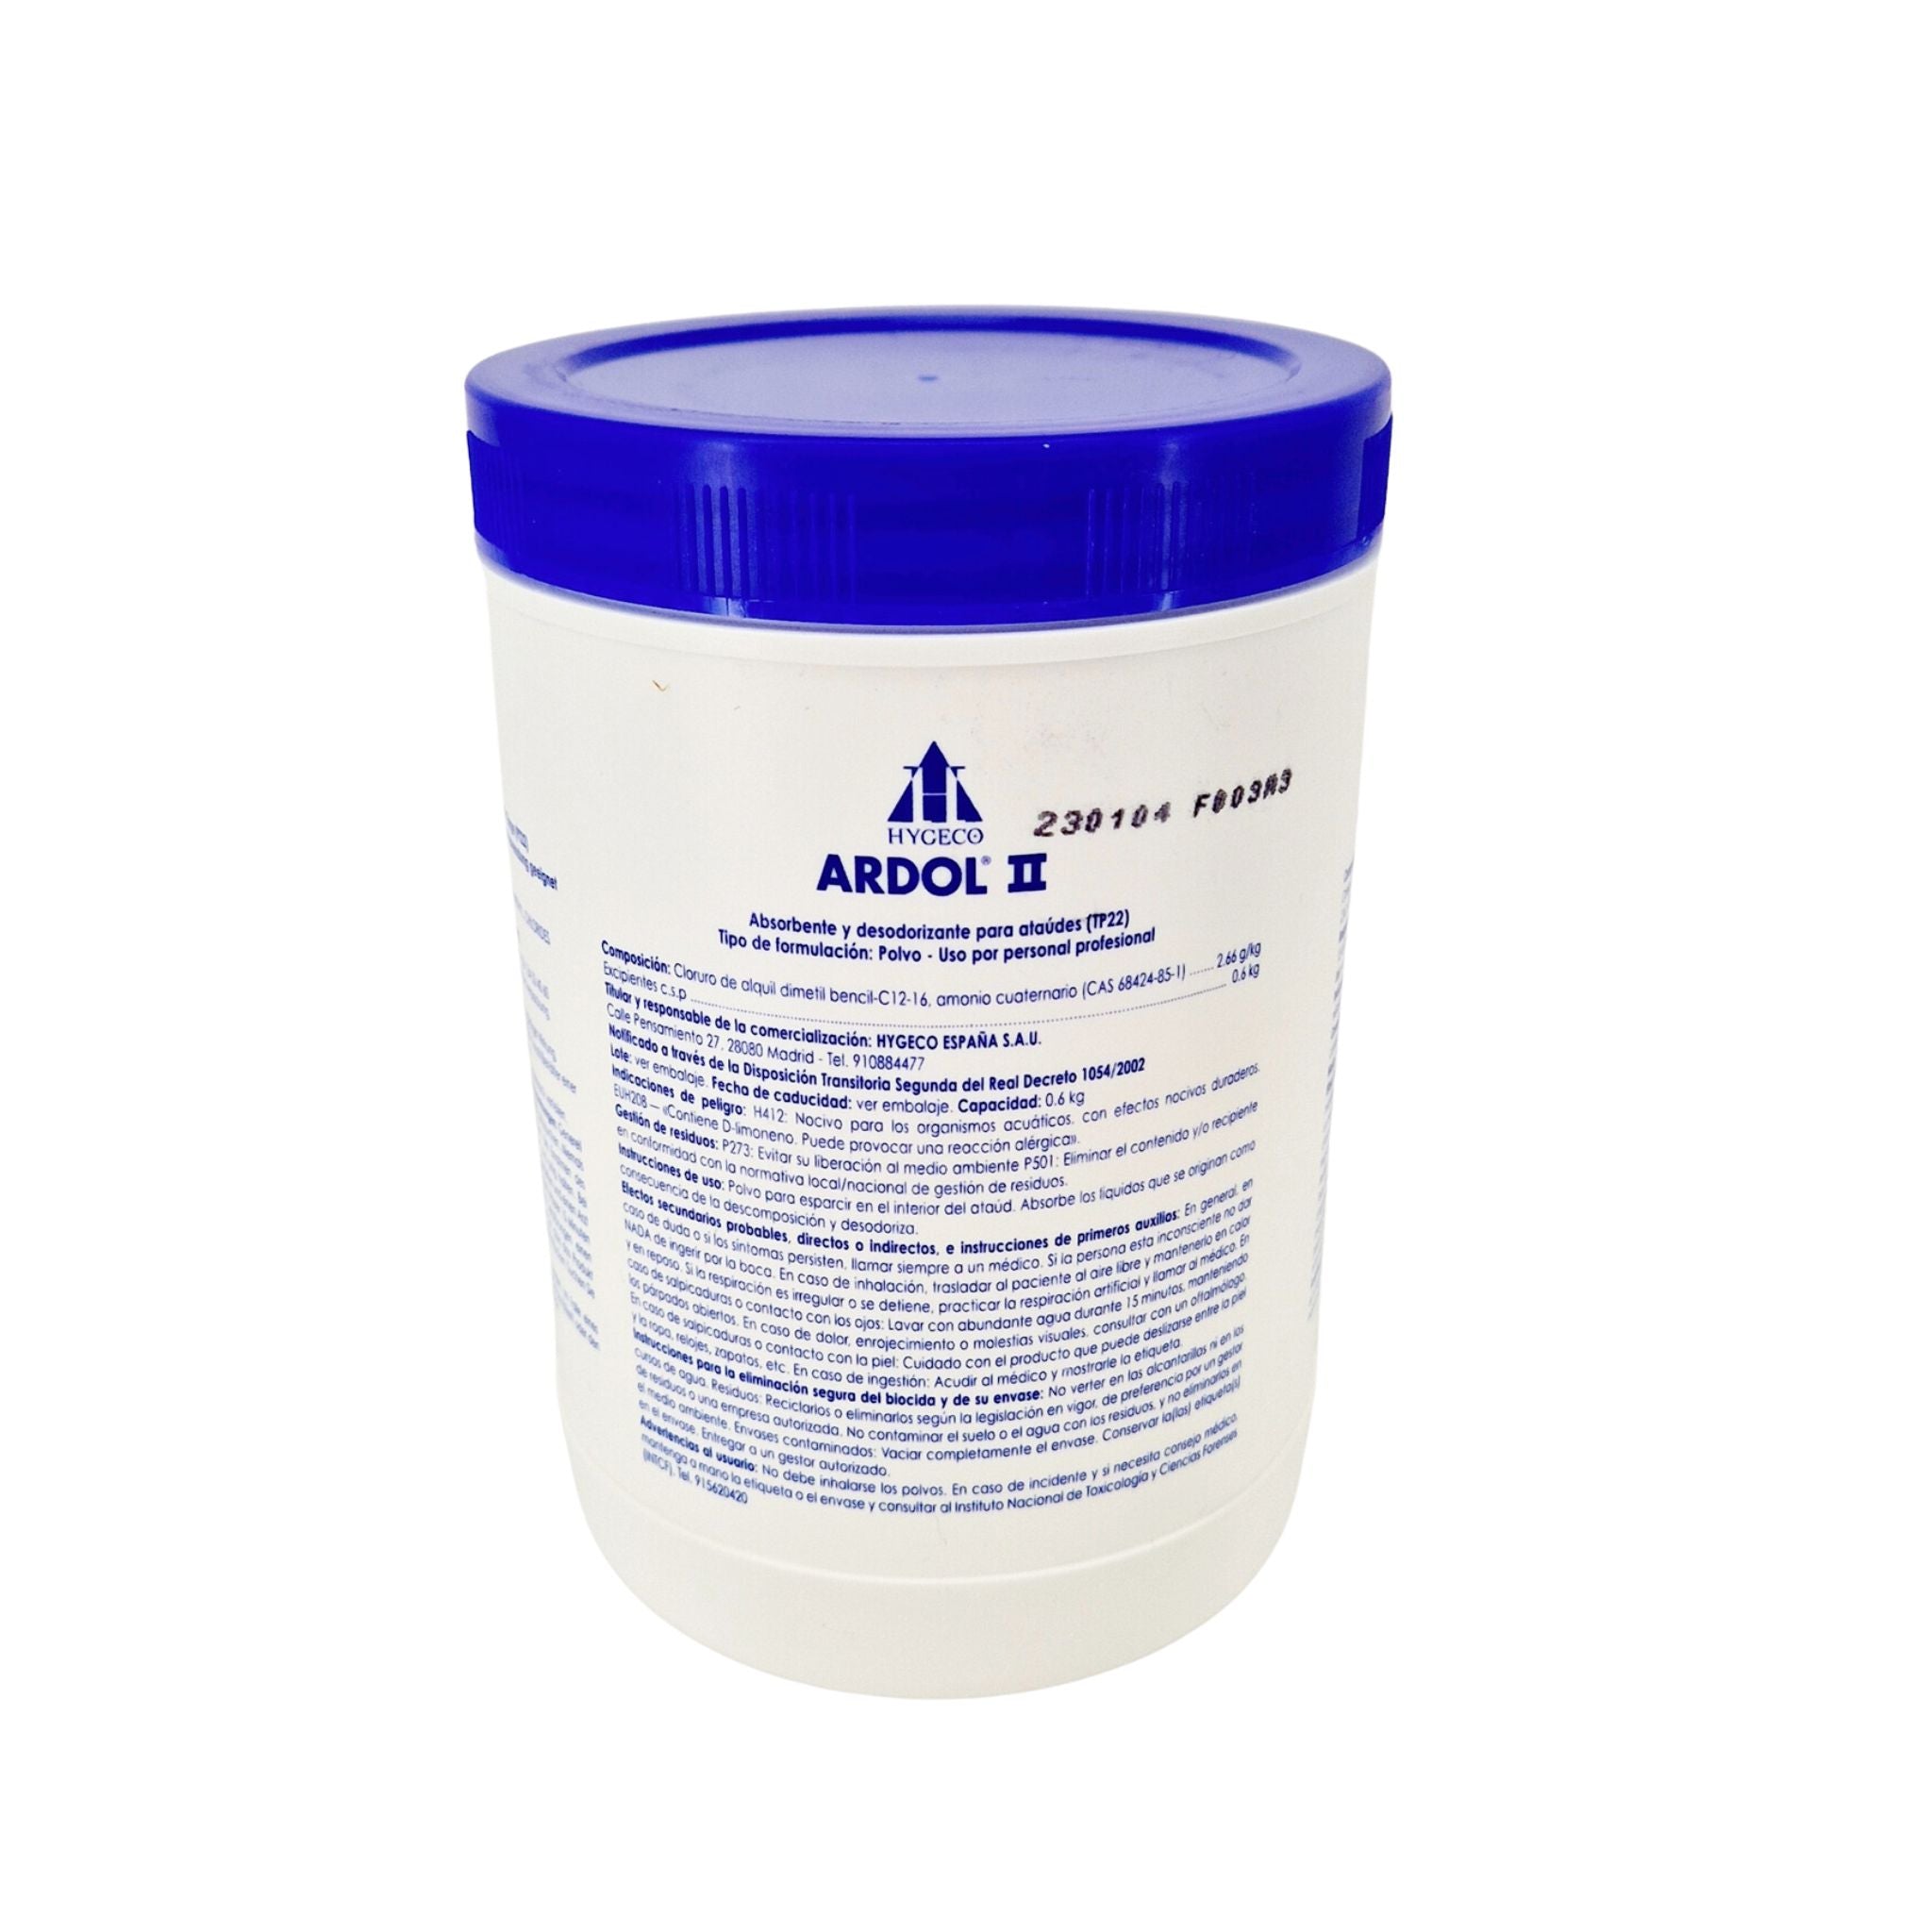 Ardol II coffin litter for odor control - 0